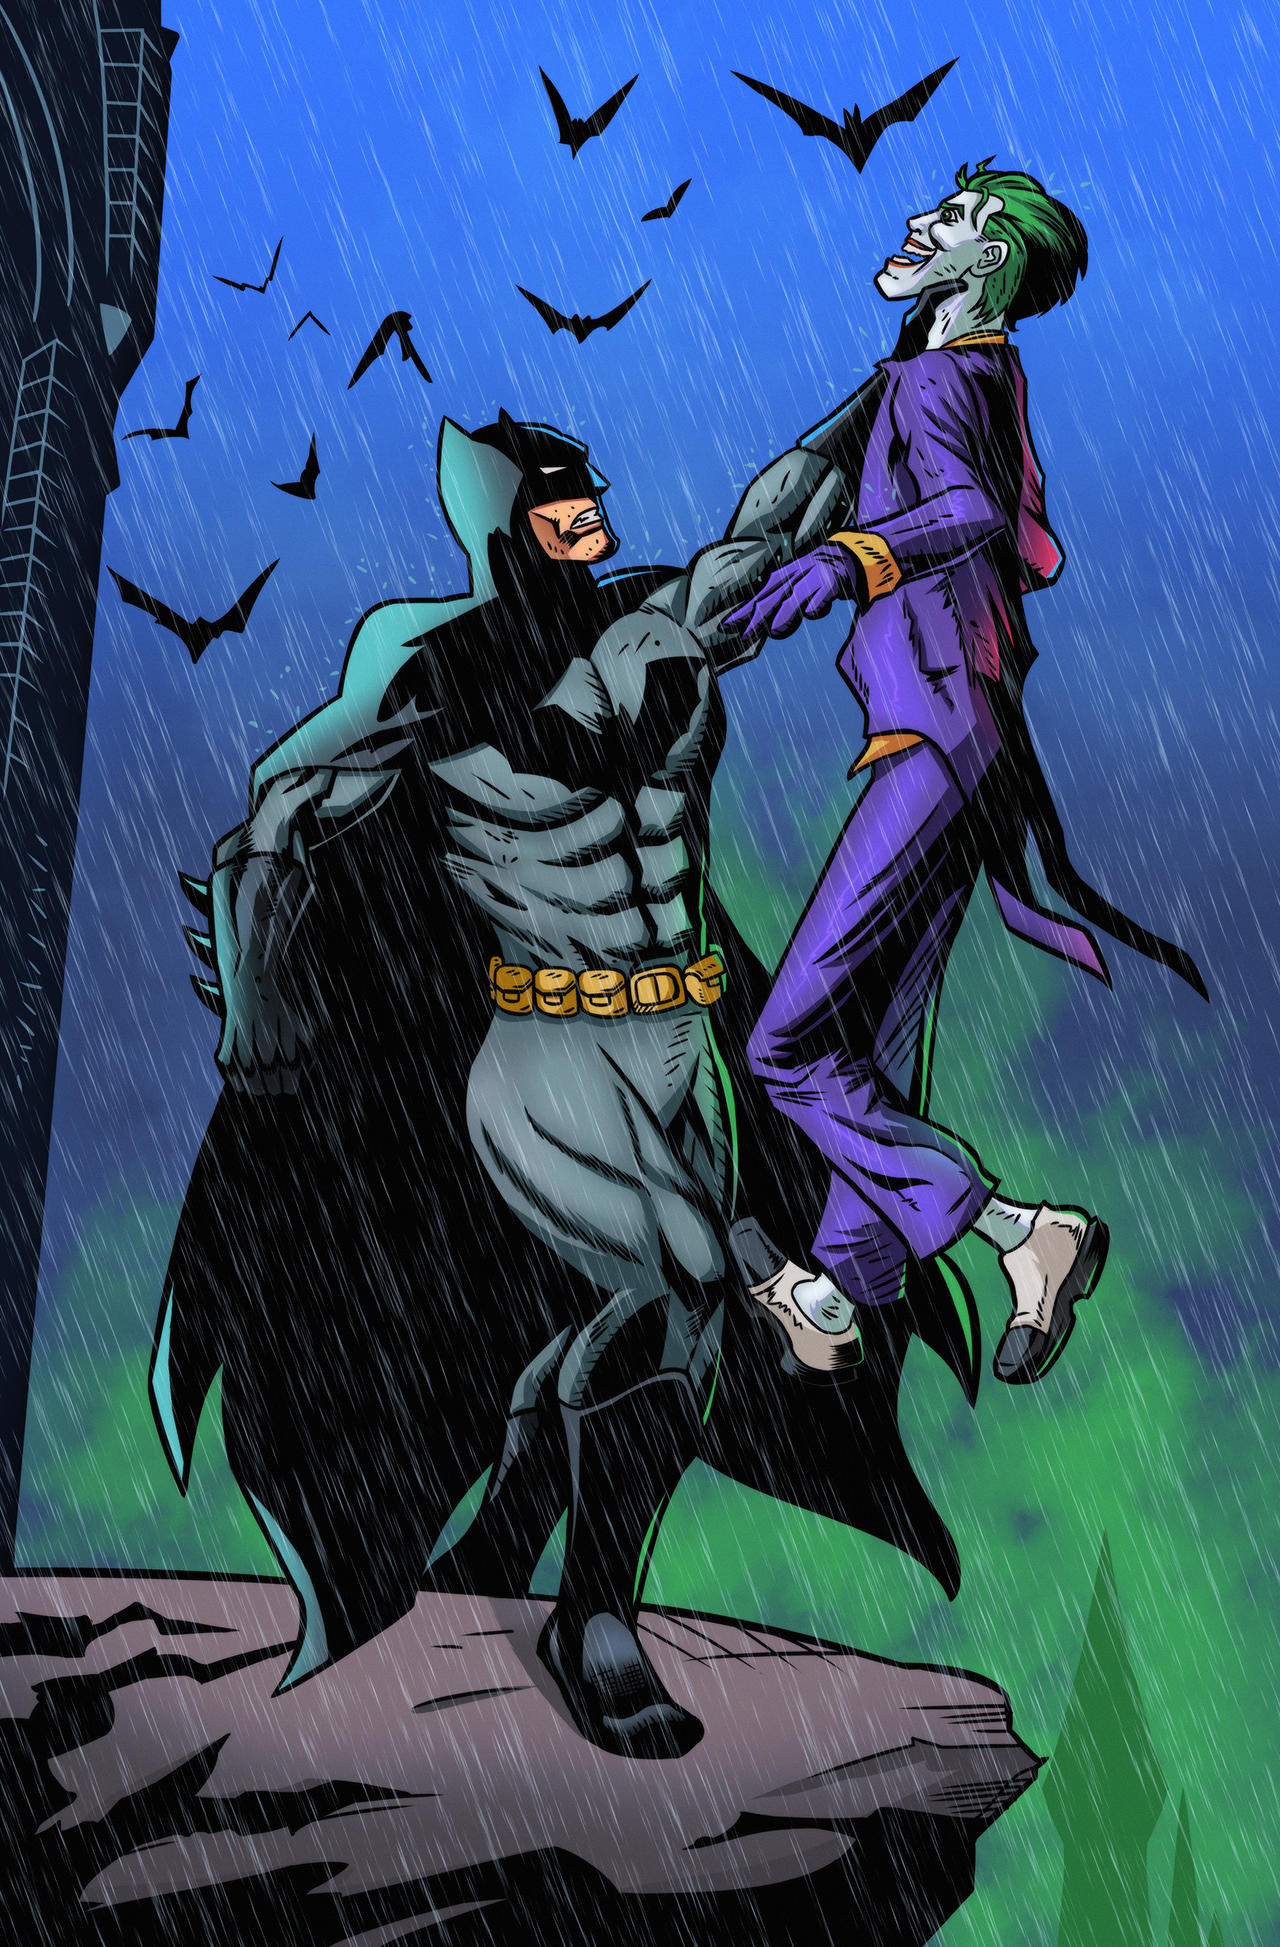 Batman vs Joker night version by IvanAlexandrovArt on DeviantArt